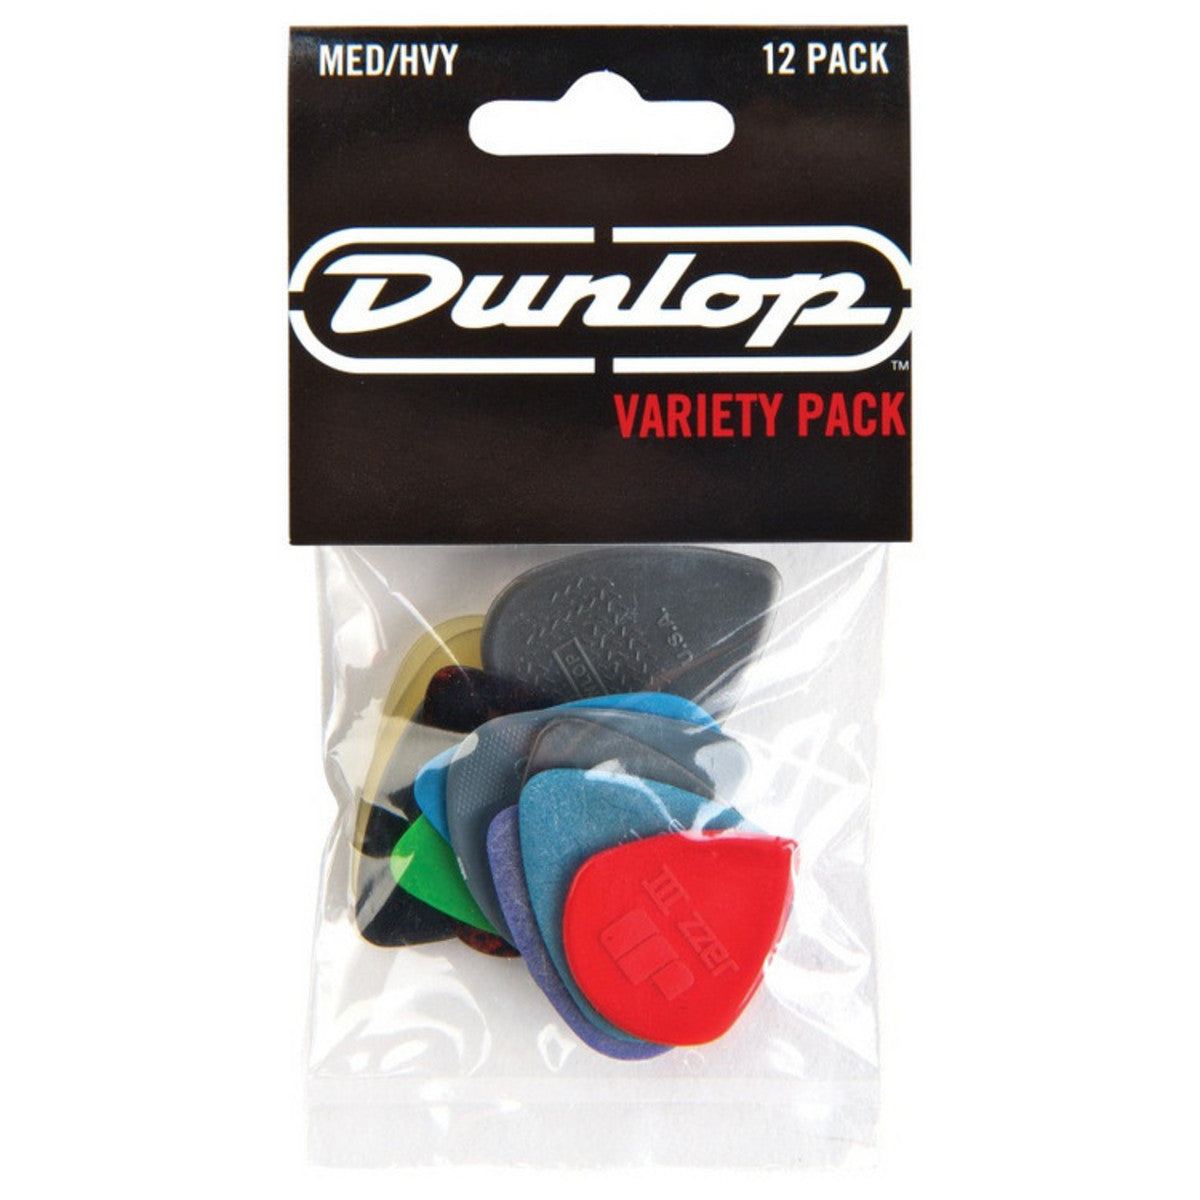 Dunlop Guitar Pick Variety Packs Light/Medium/Heavy- 12-Pack